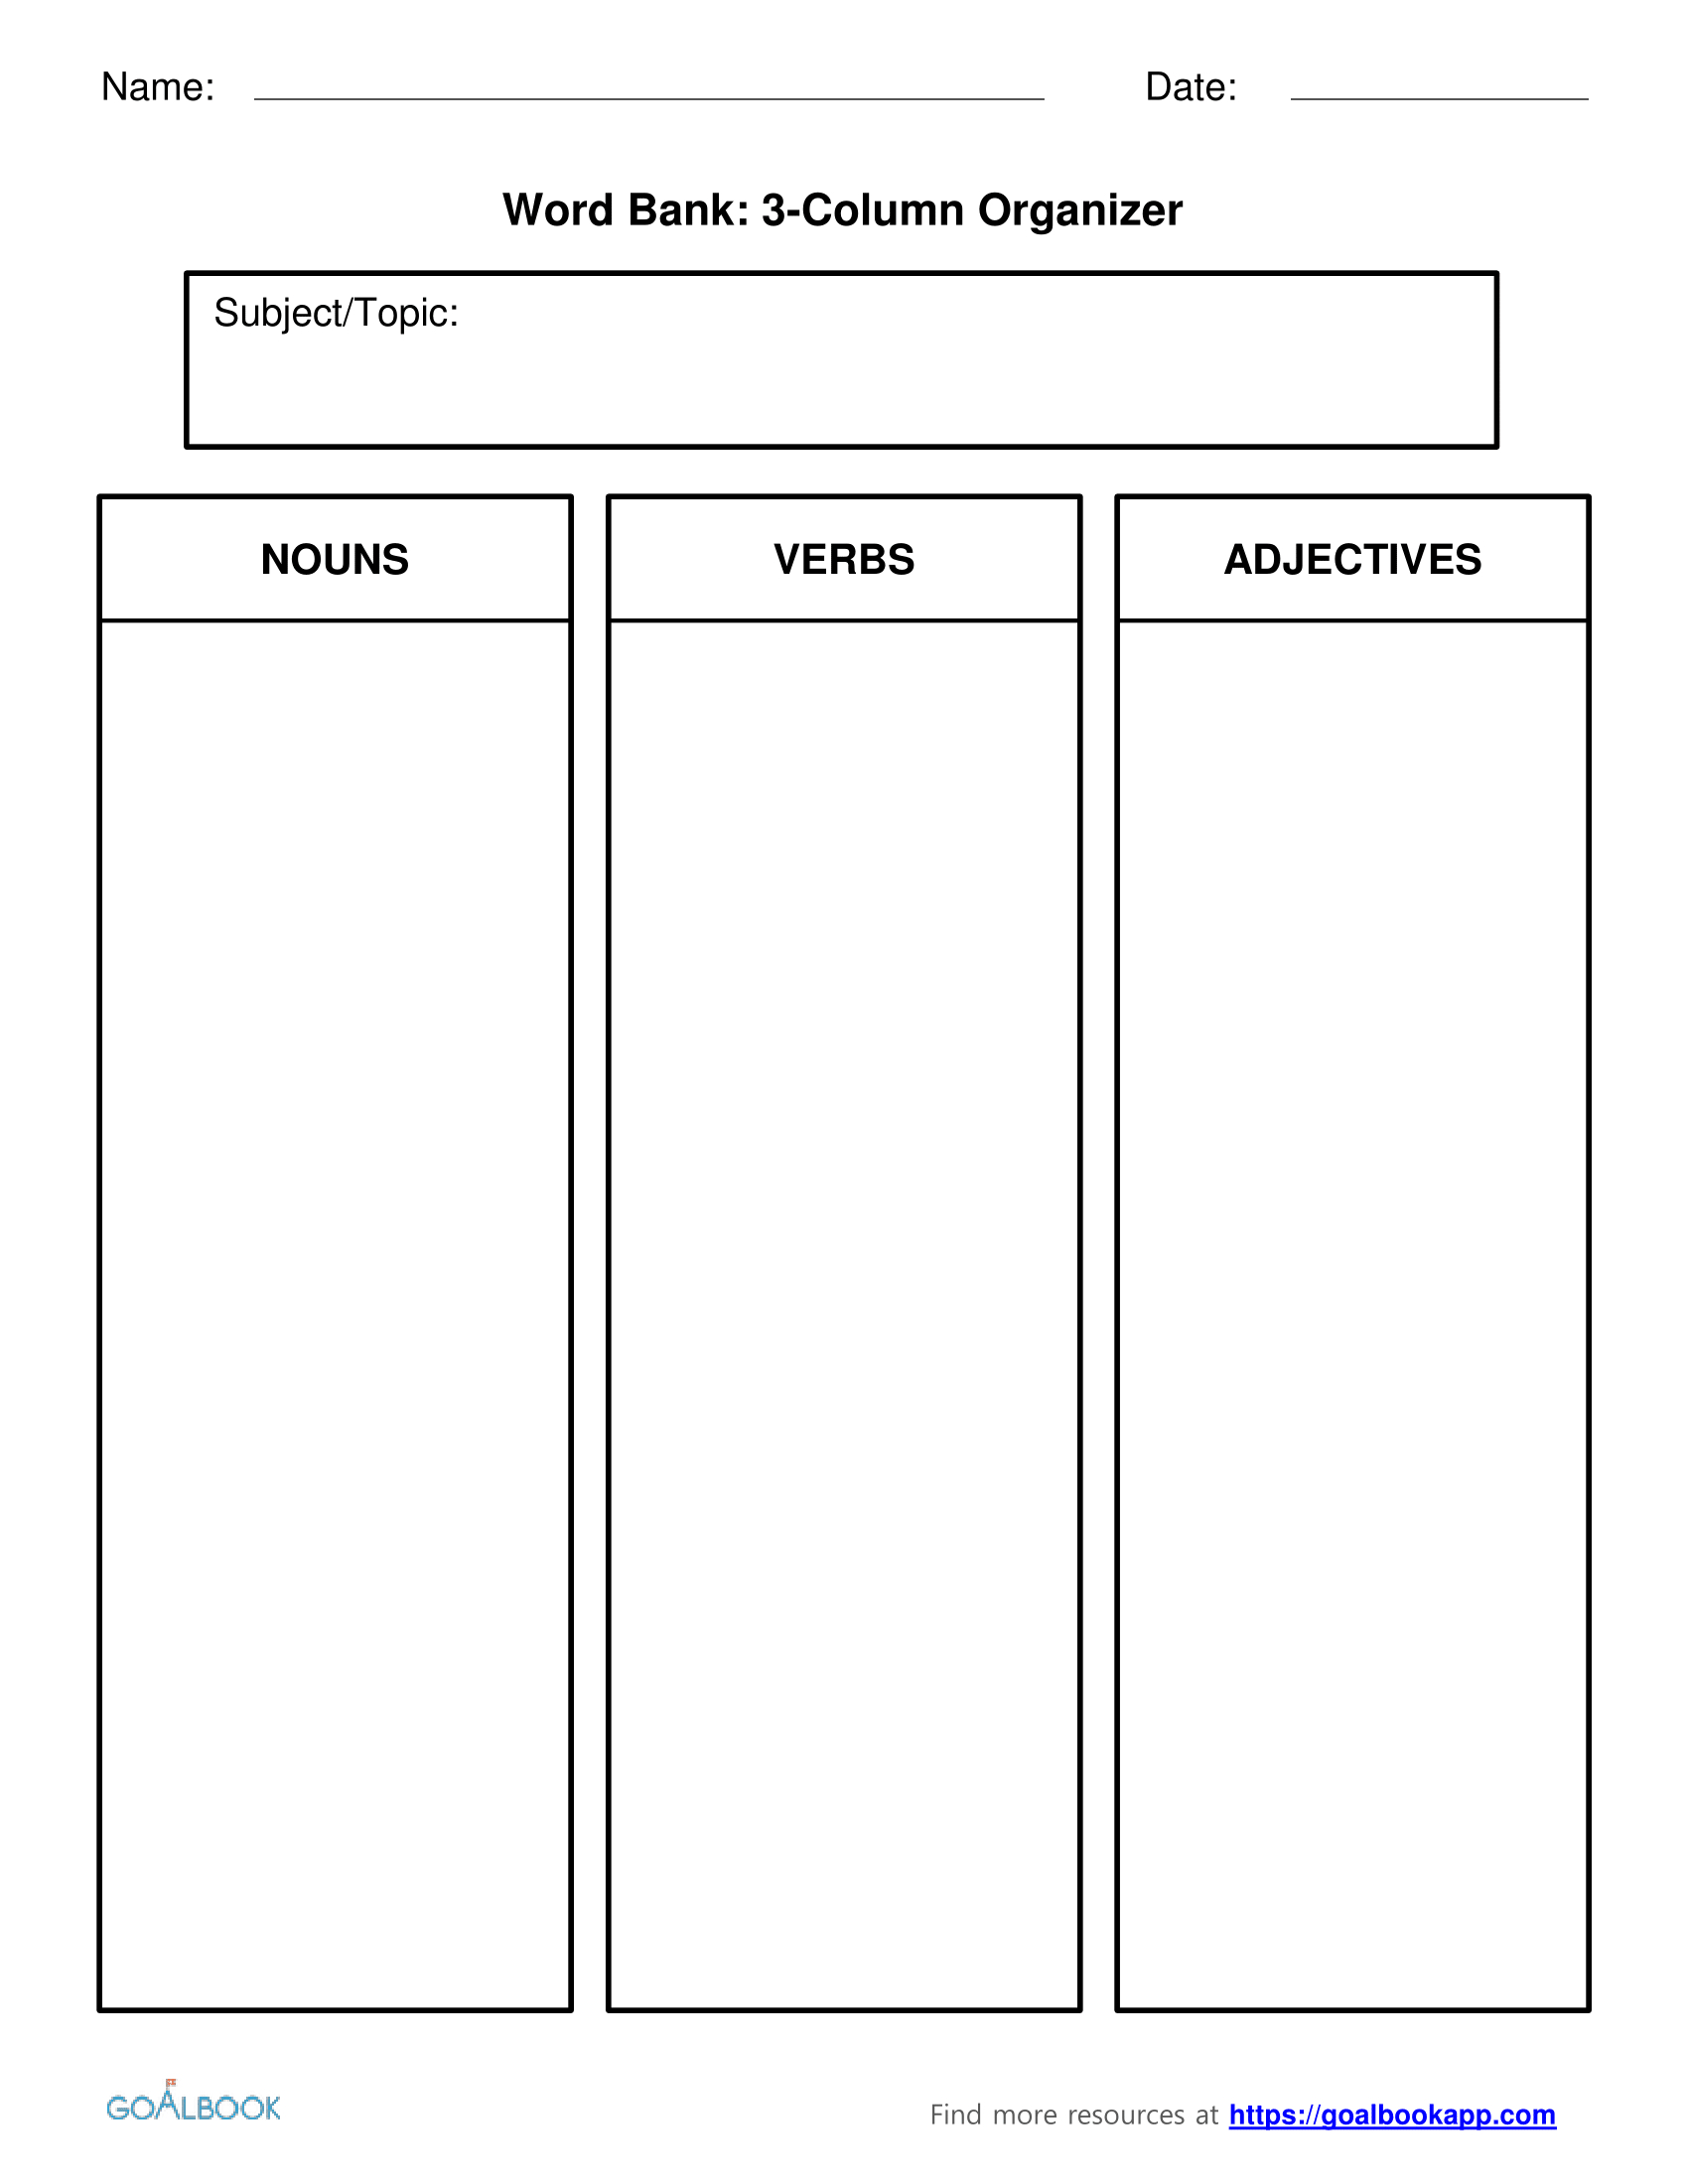 Word Bank | Udl Strategies - Goalbook Toolkit Intended For 3 Column Word Template